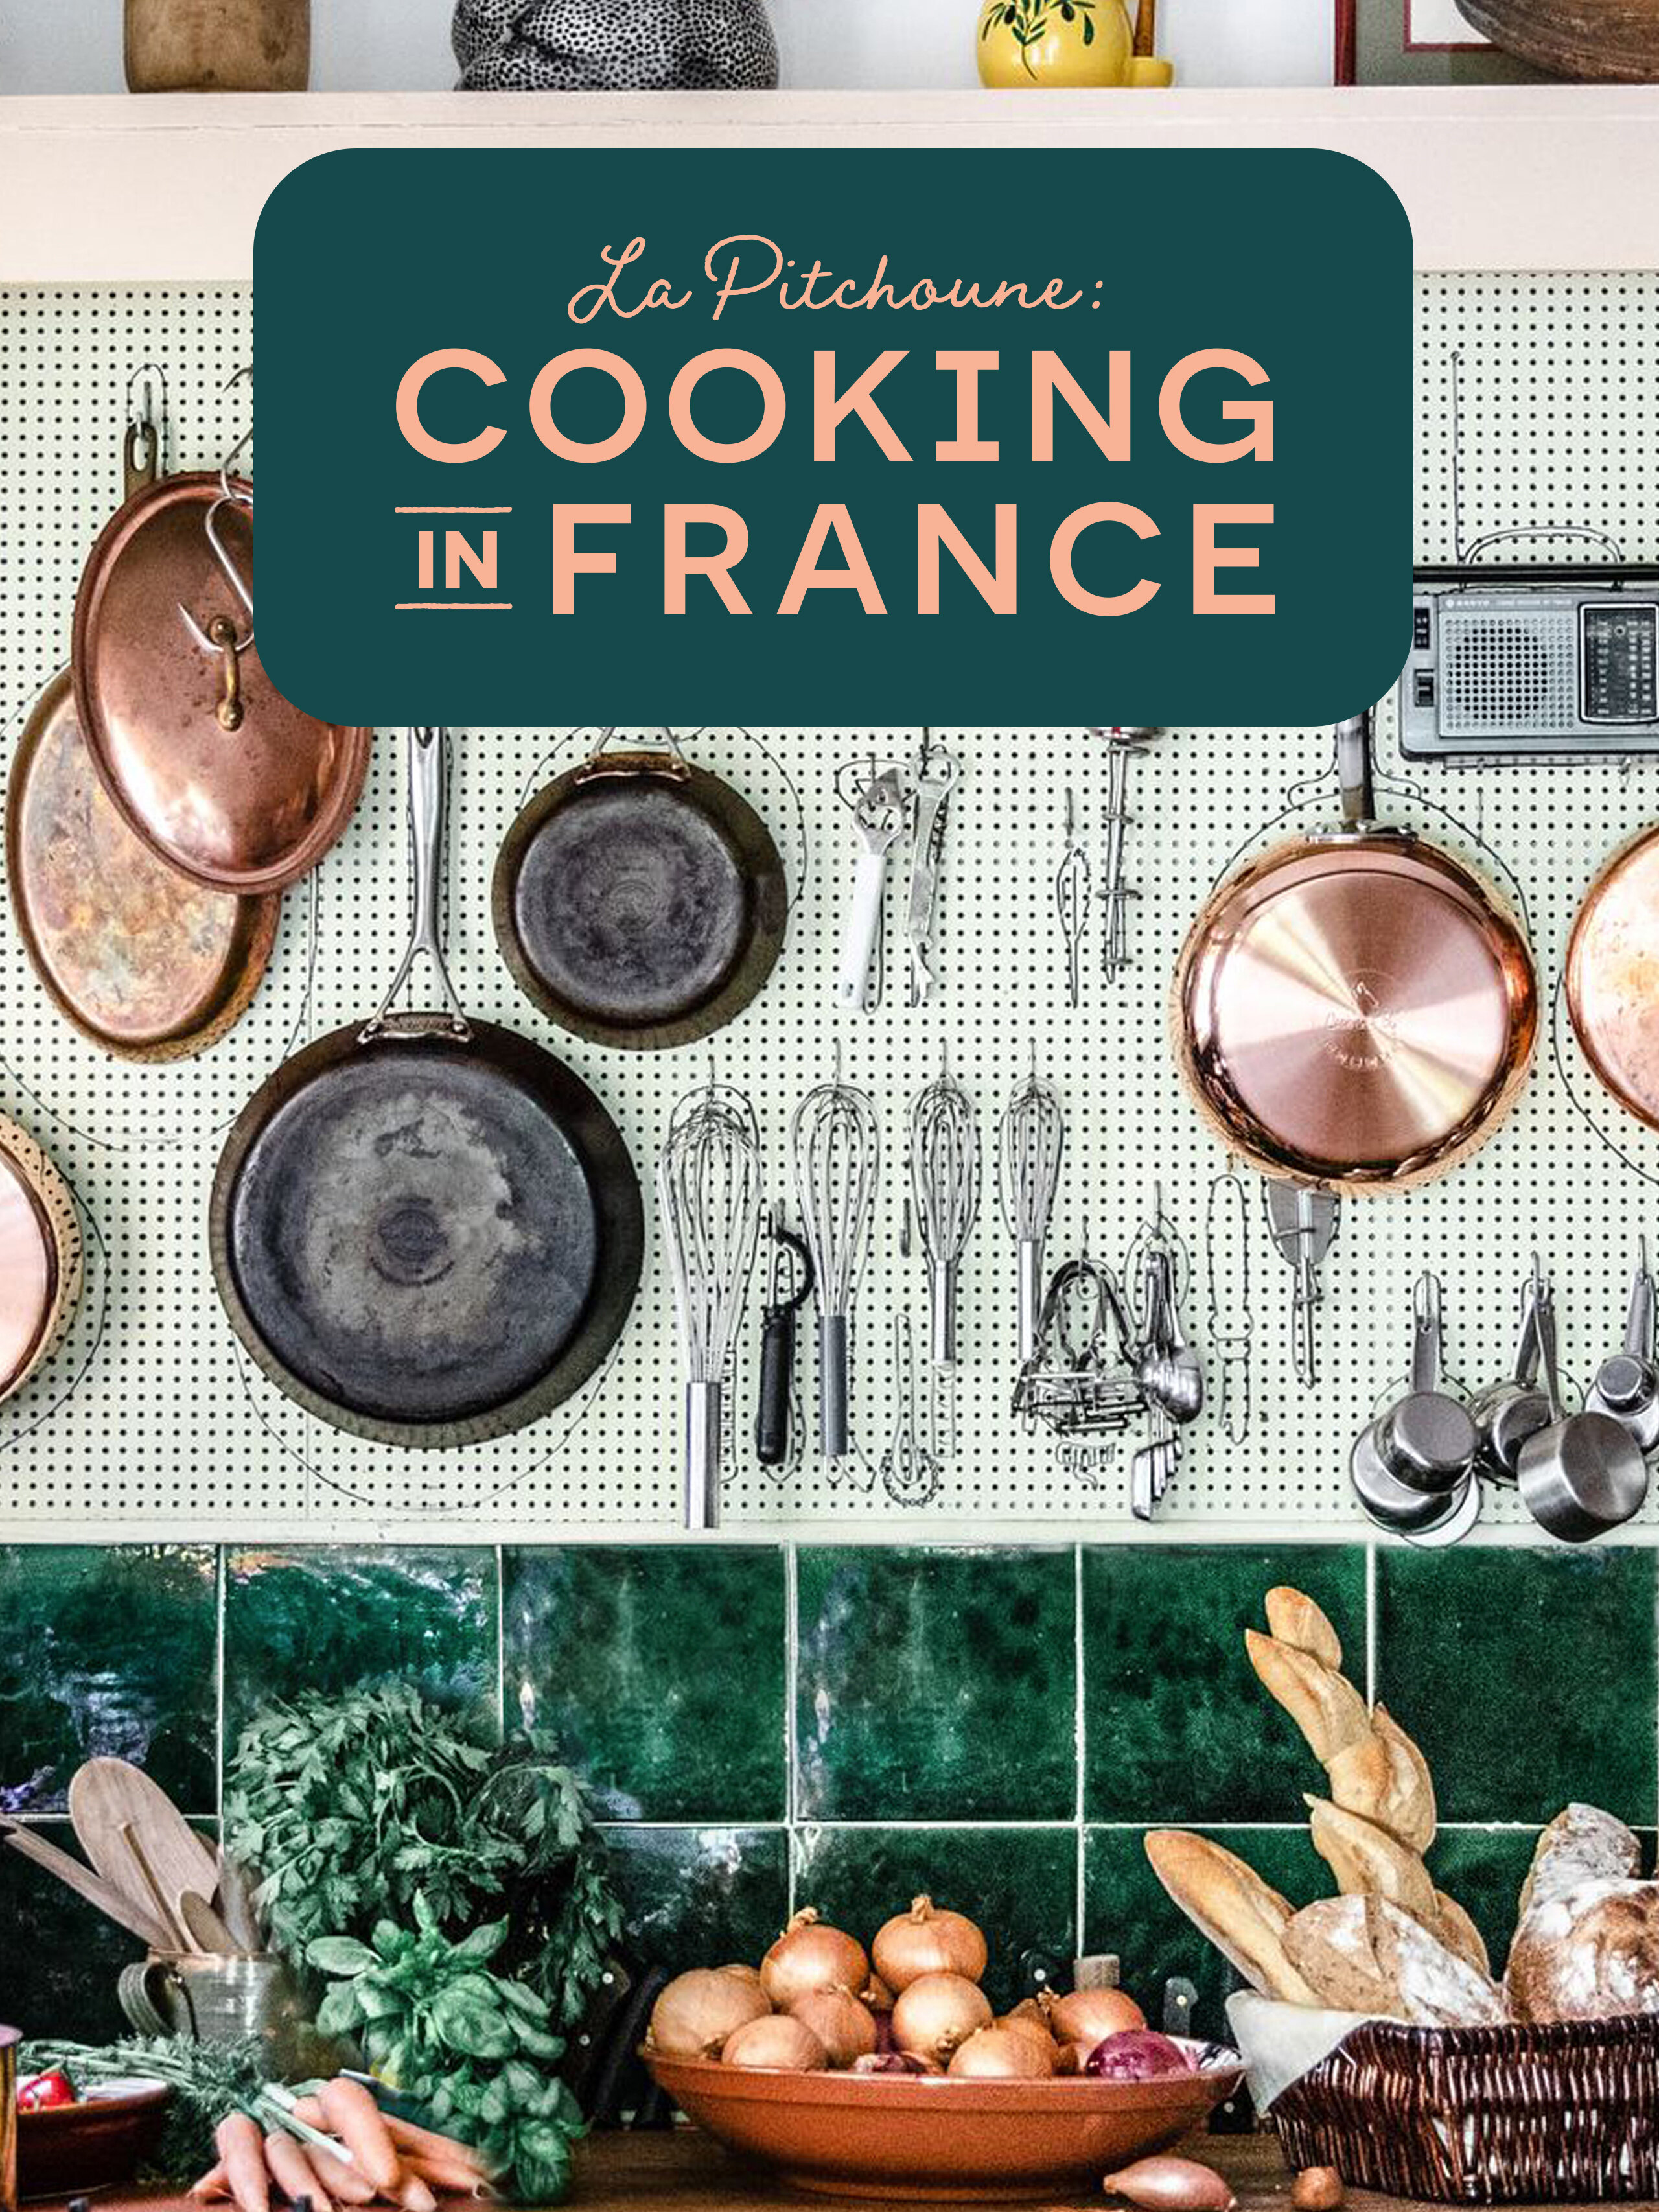 La Pitchoune: Cooking in France ne zaman